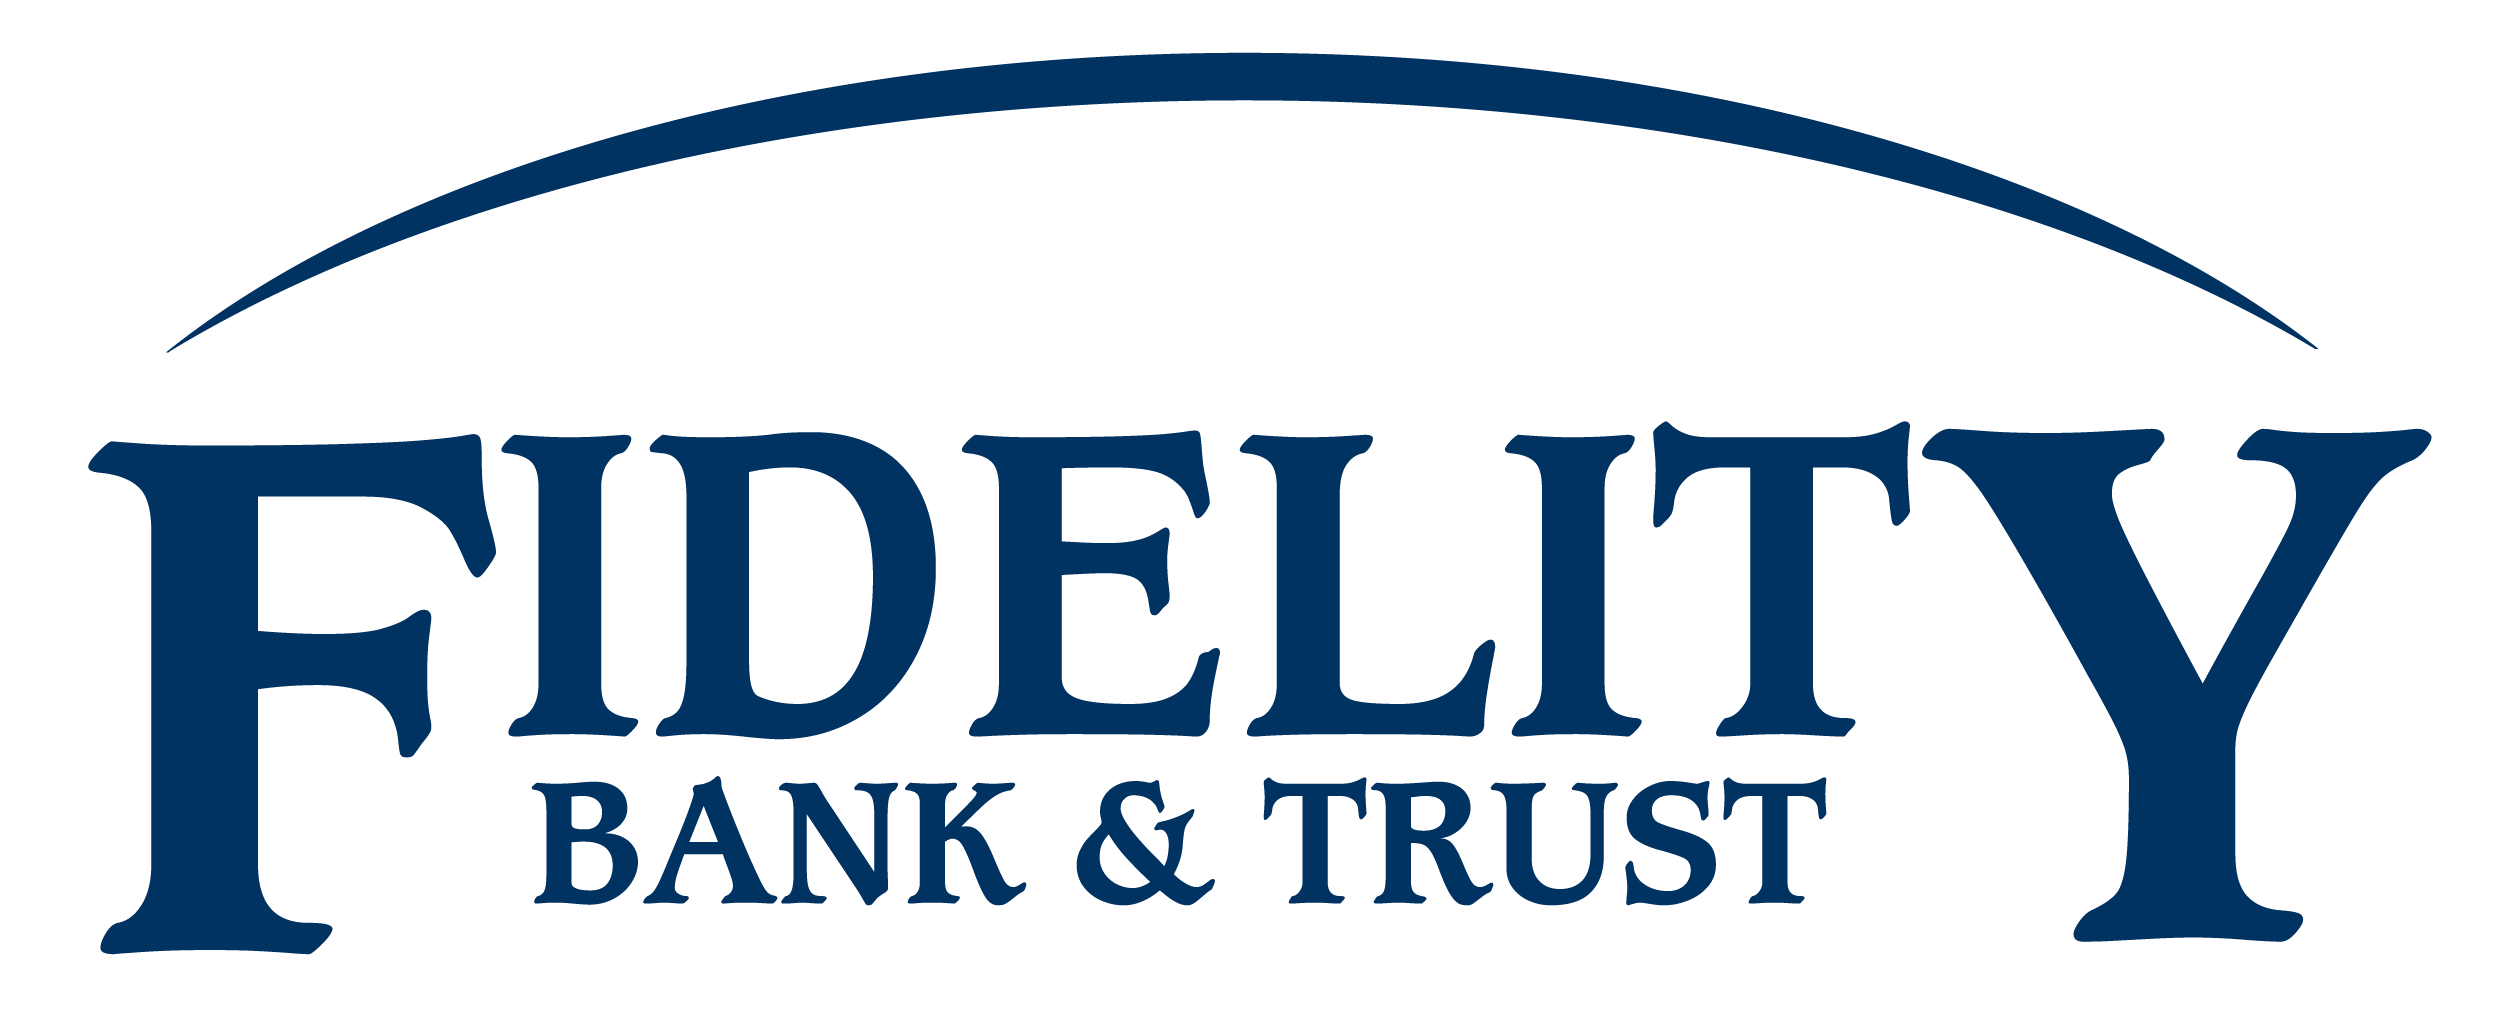 Fidelity Bank & Trust Job Opportunities